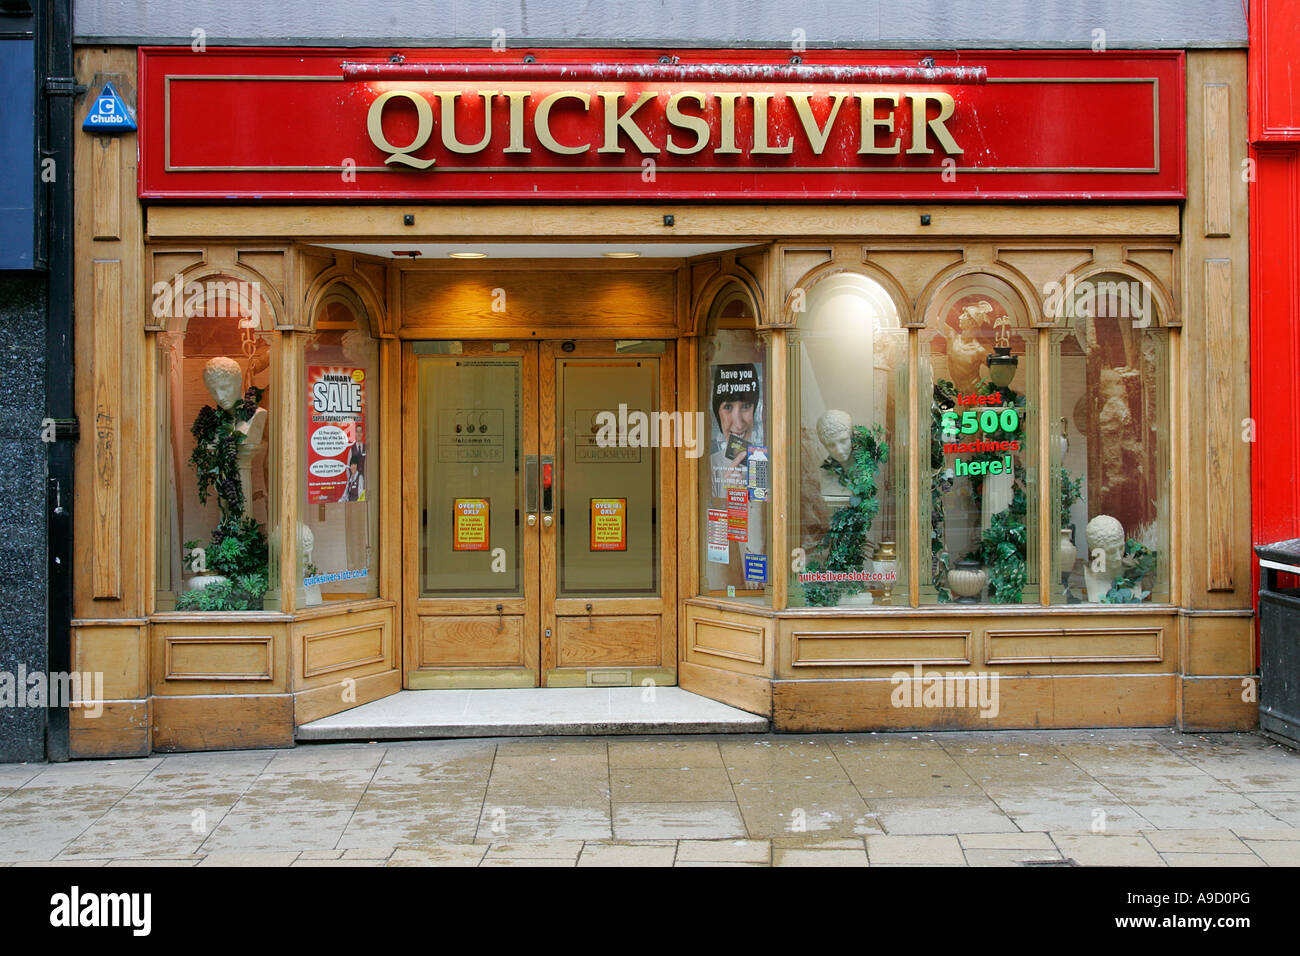 Quicksilver shop front window display Stock Photo